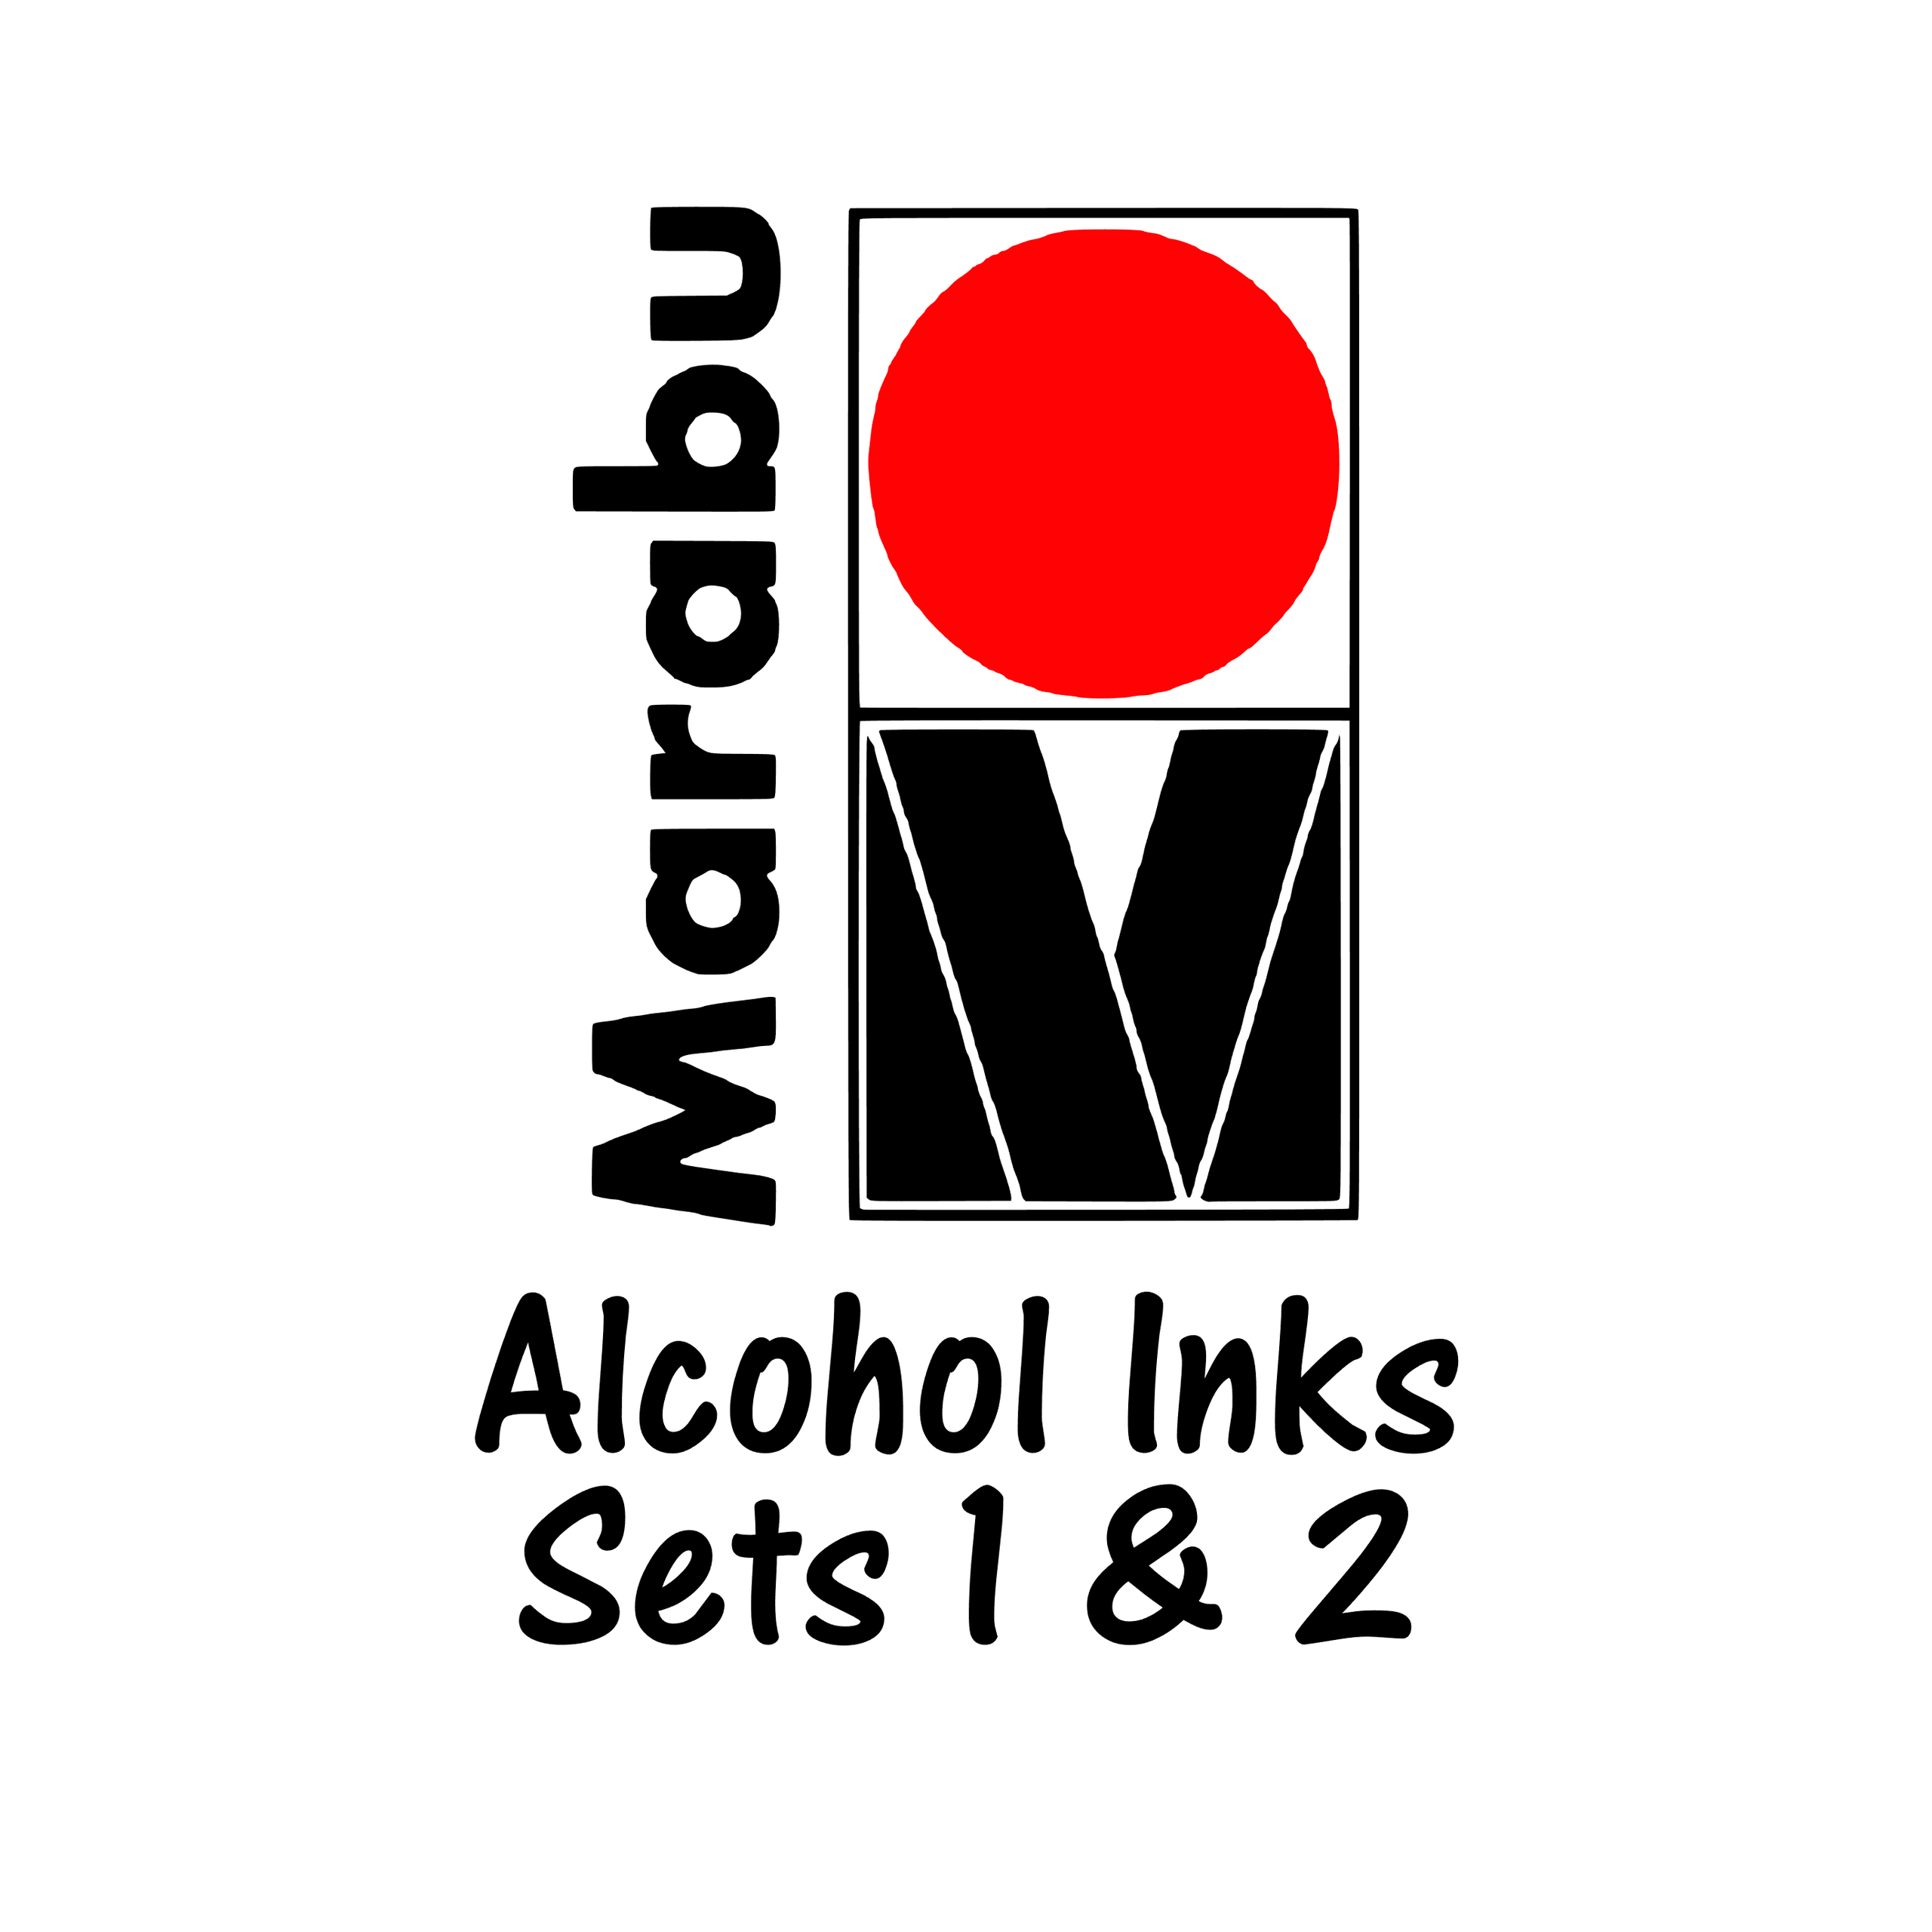 Marabu Alcohol Ink - Olive Green